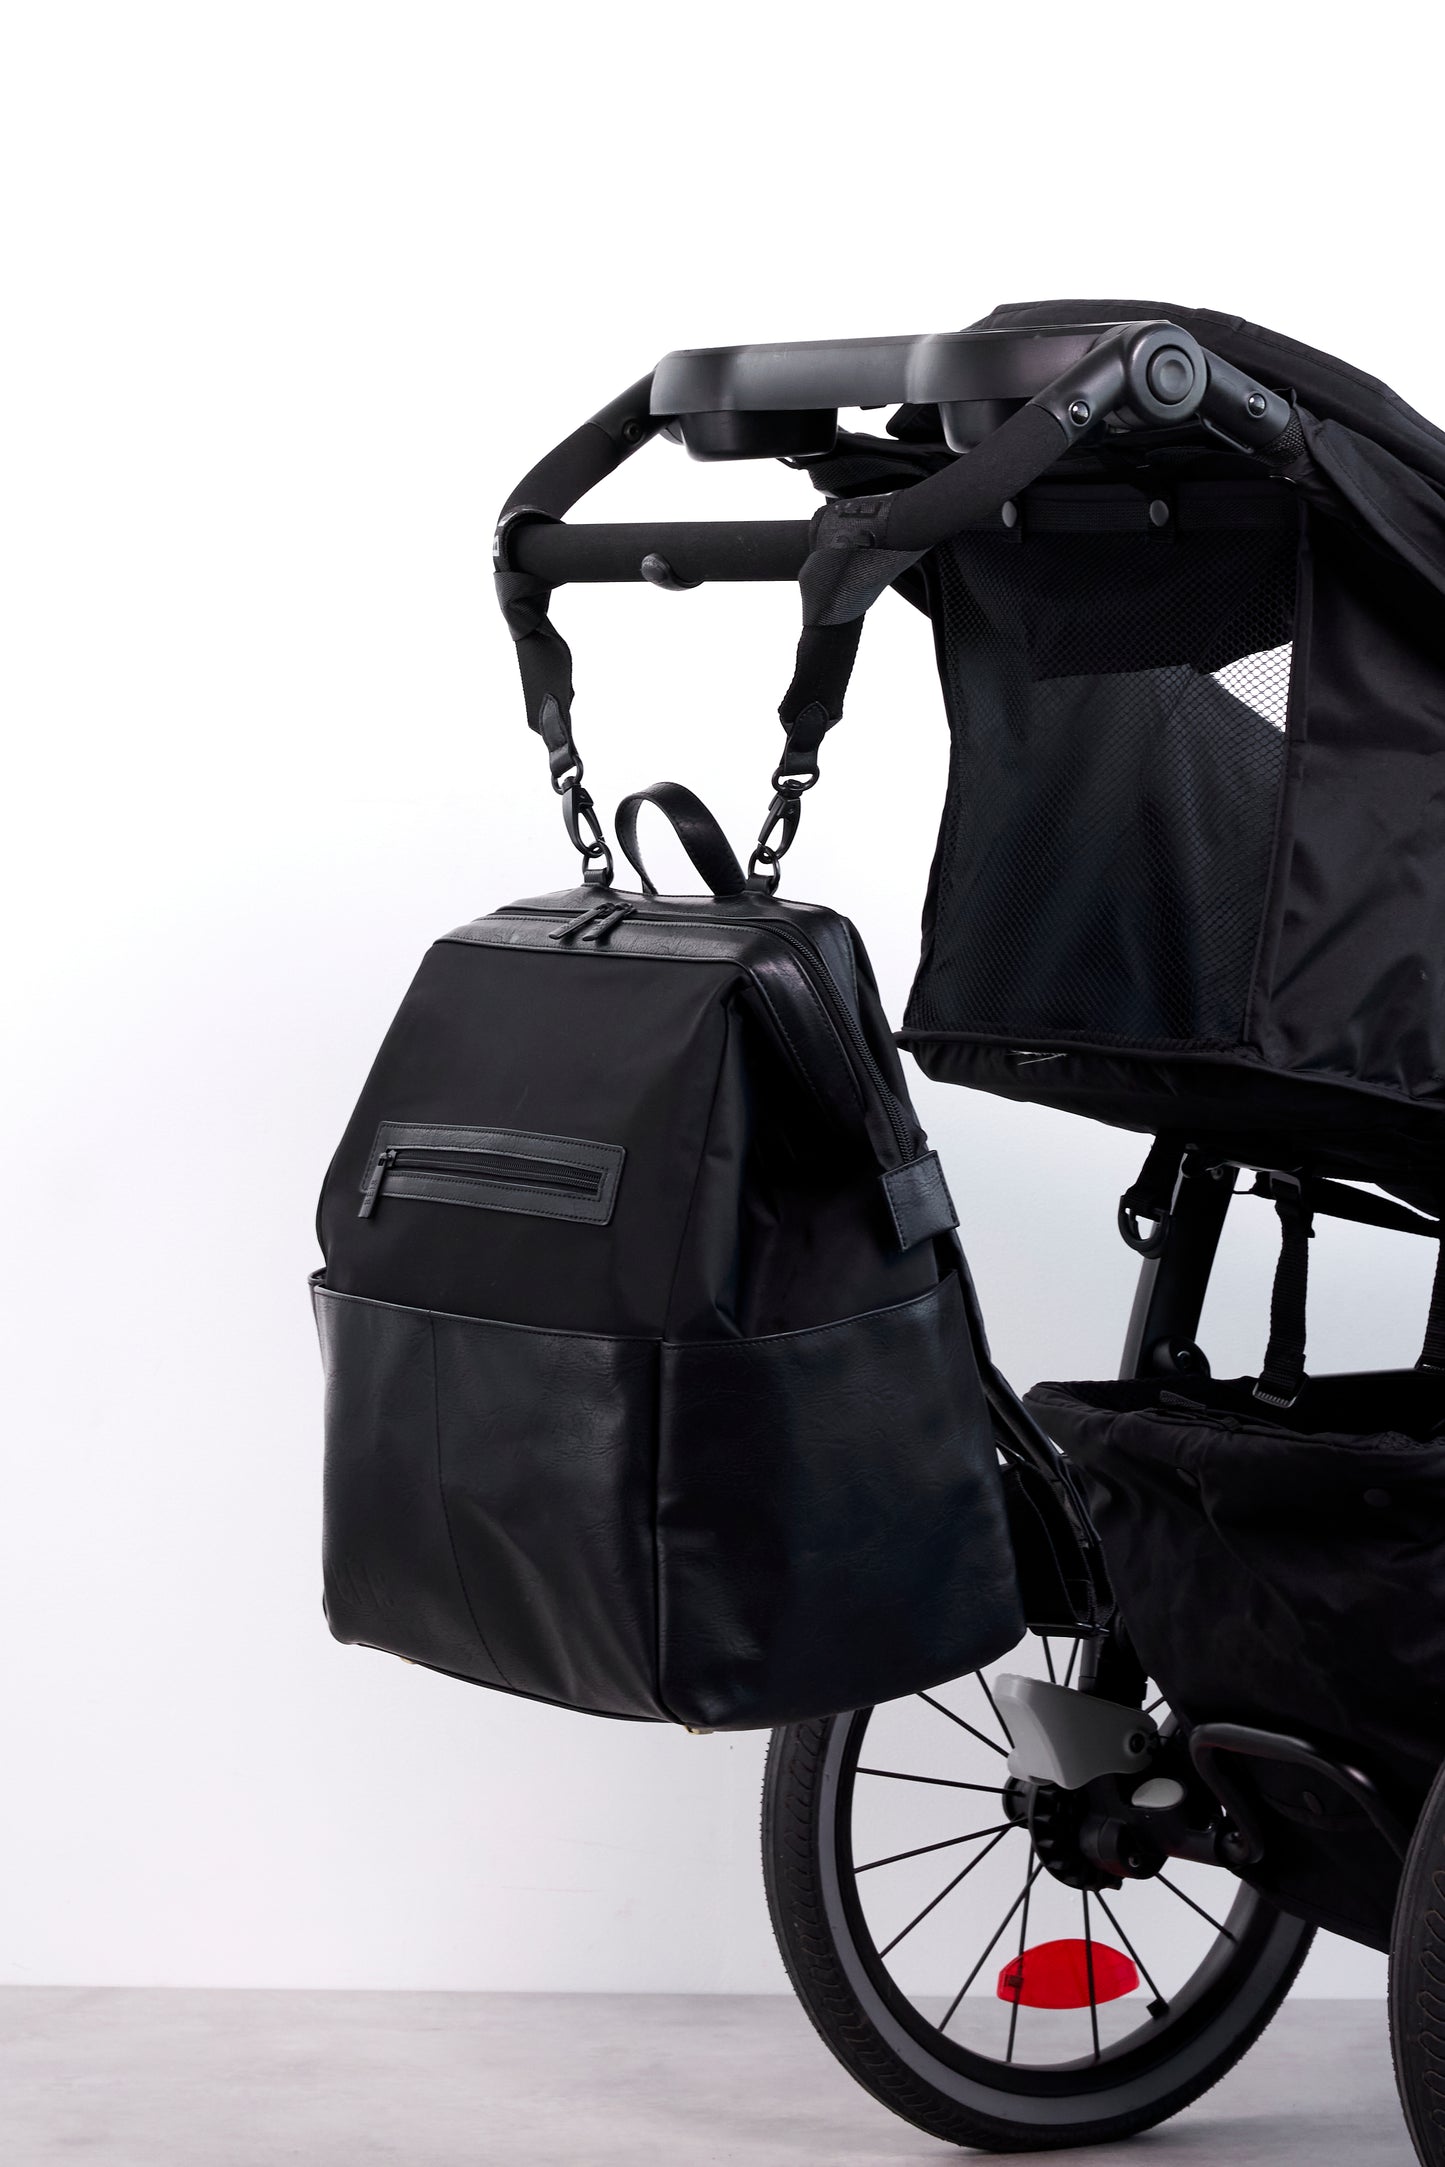 BÉIS 'The Diaper Backpack' in Black - Black Diaper Bag & Diaper Backpack